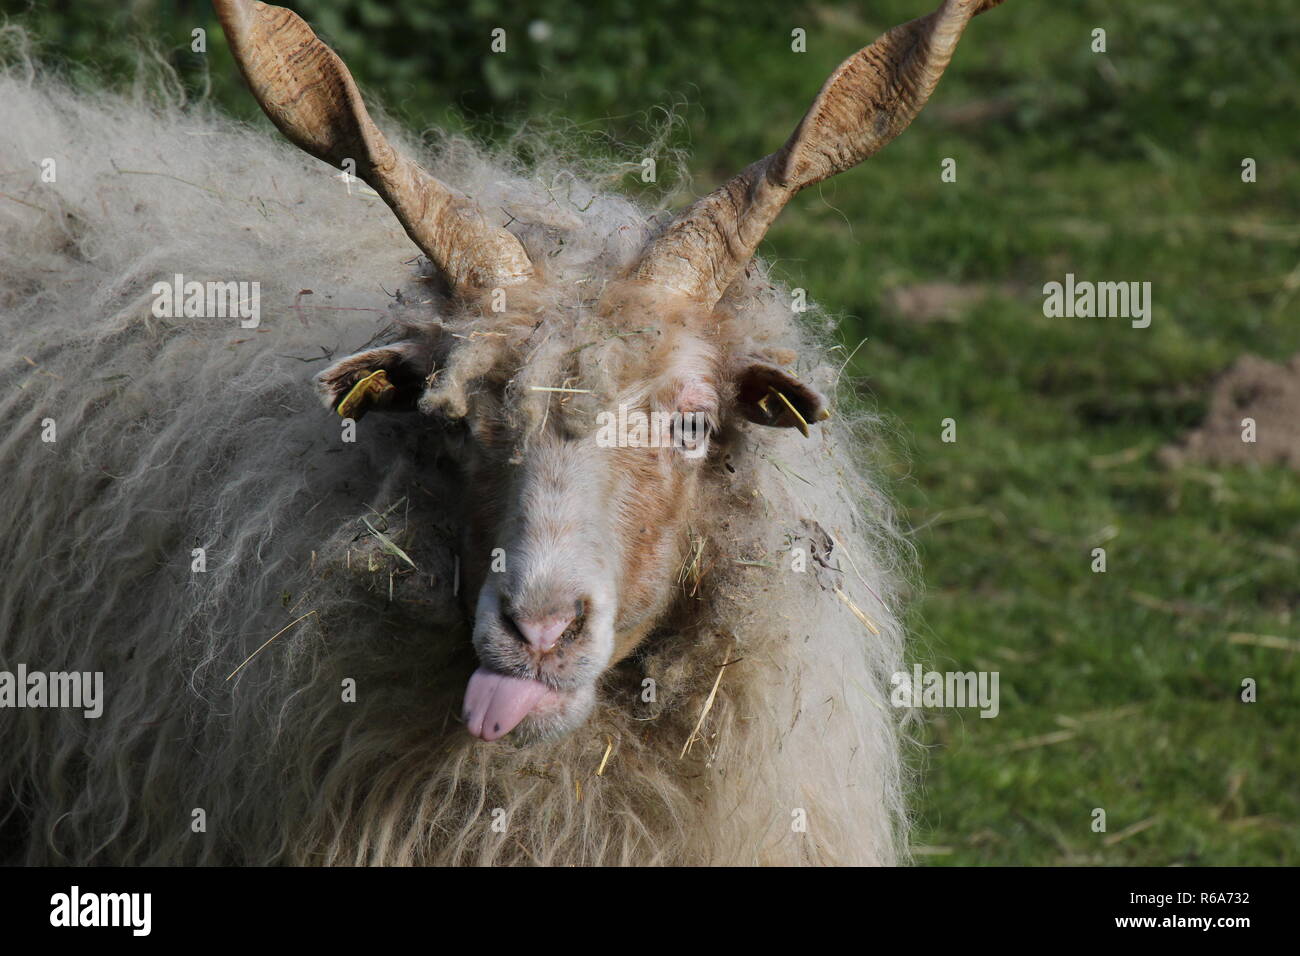 Racka or Hungarian sheep Stock Photo